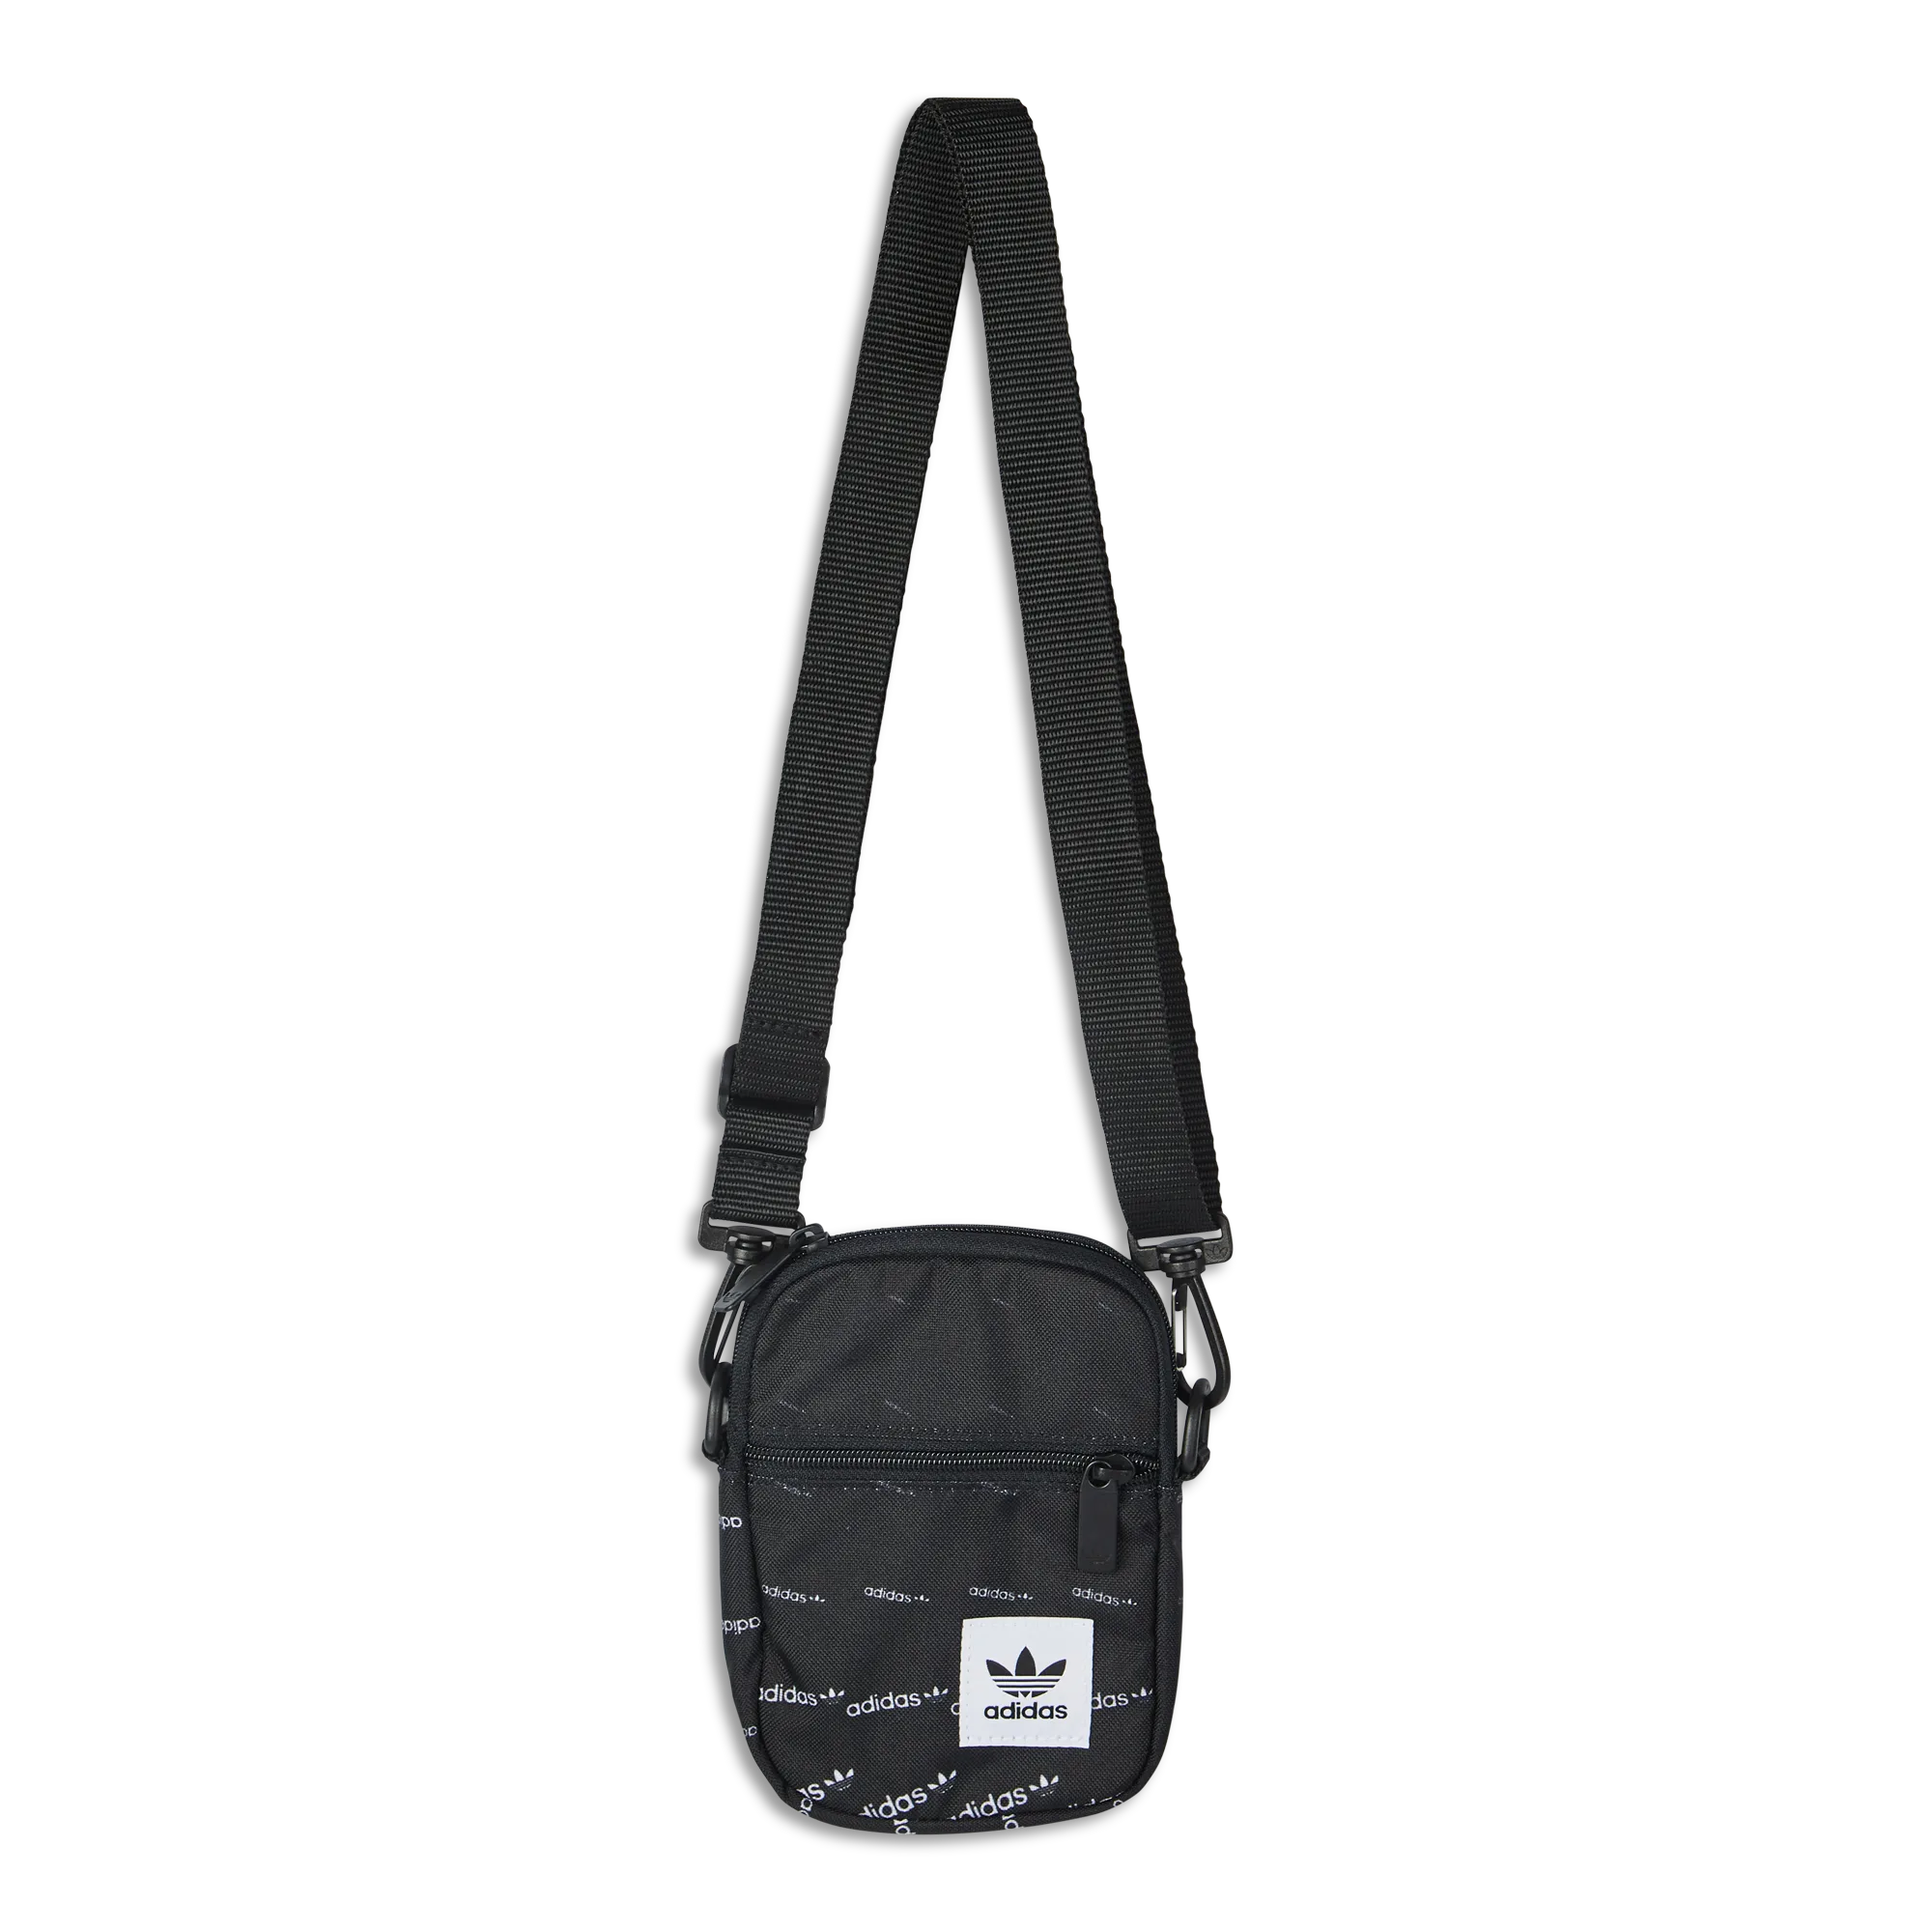  Small Shoulder Bag - Unisex Borse